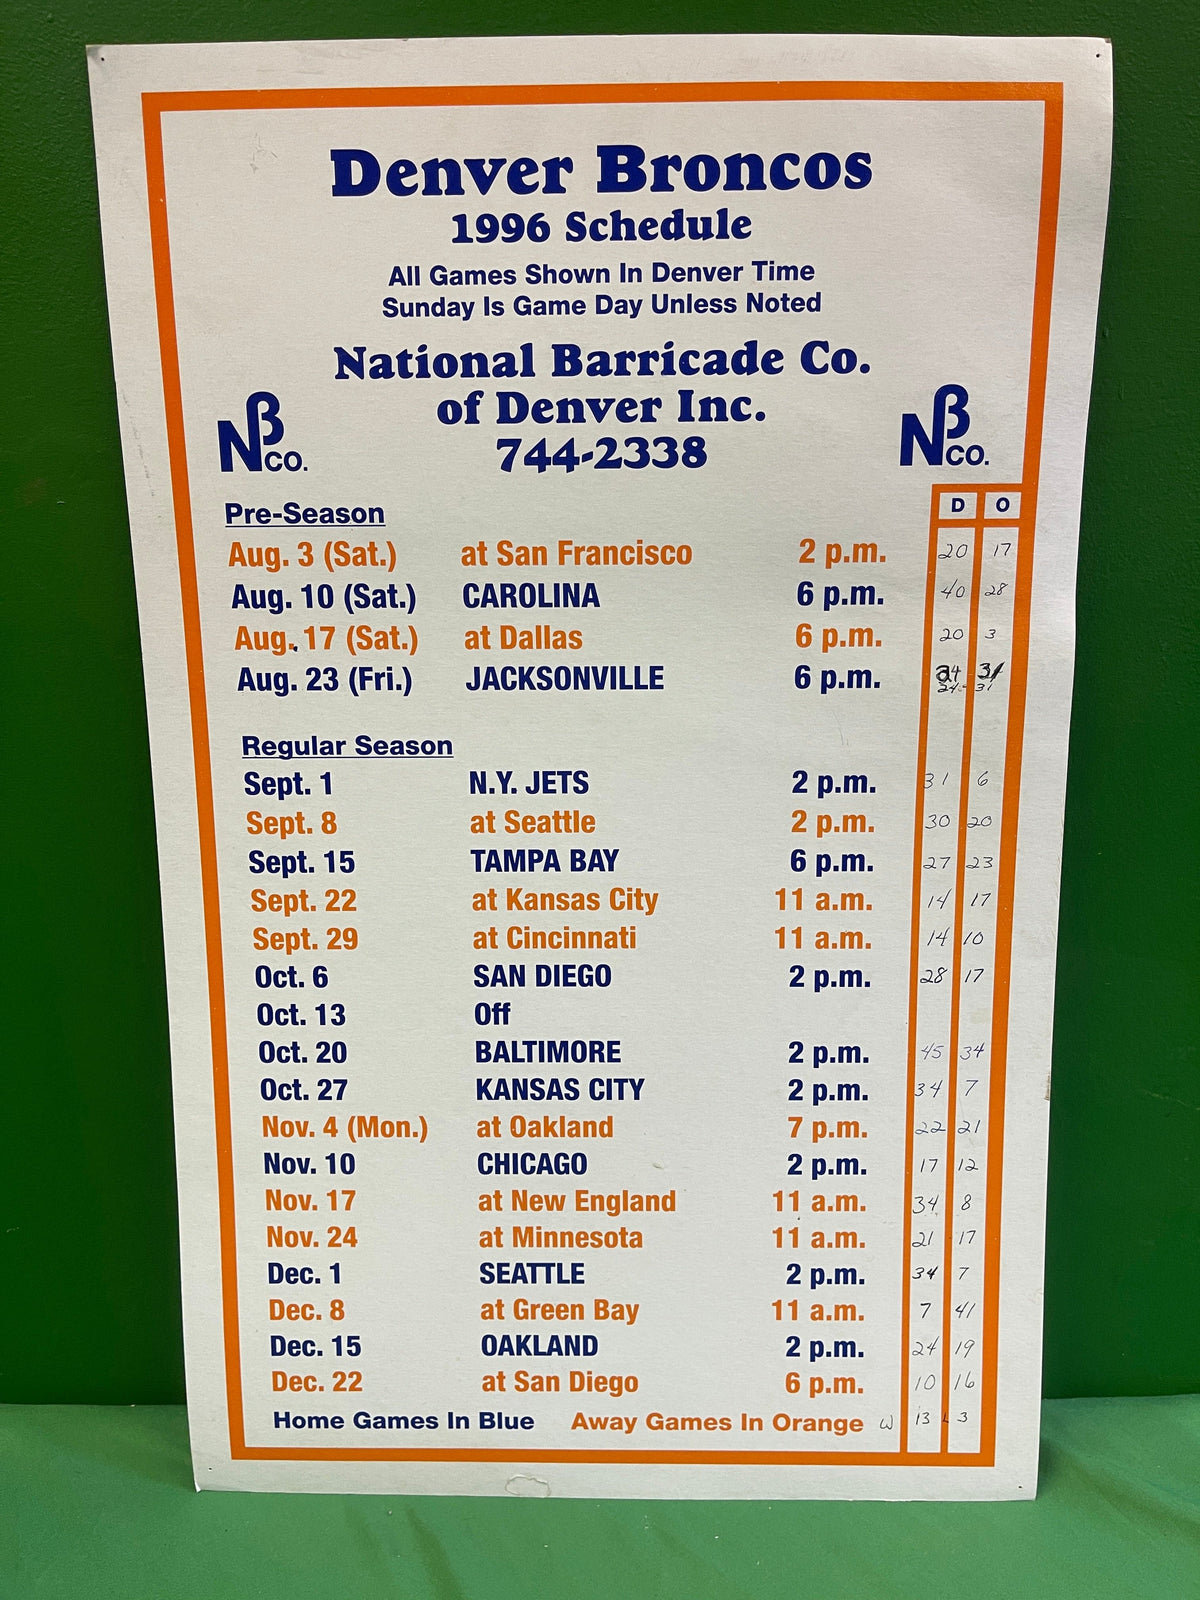 NFL Denver Broncos Fan Cave 1986 Schedule/Fixtures Collectable Promo Poster